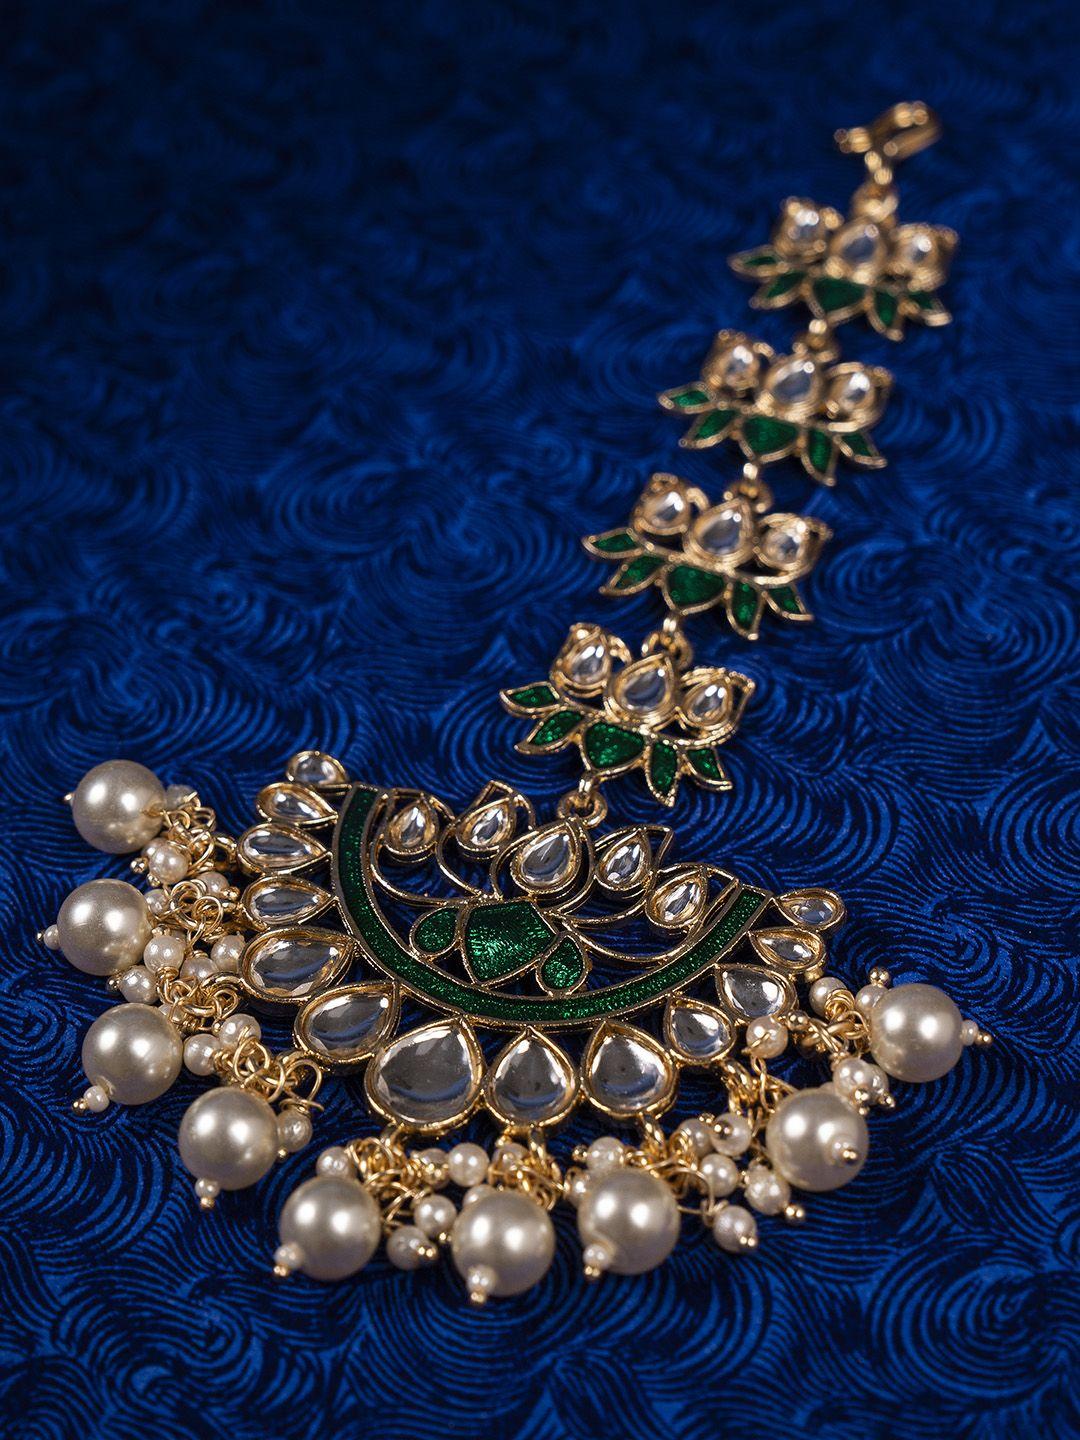 shoshaa 22 kt gold-plated white & green kundan-studded pearls handcrafted maang tikka